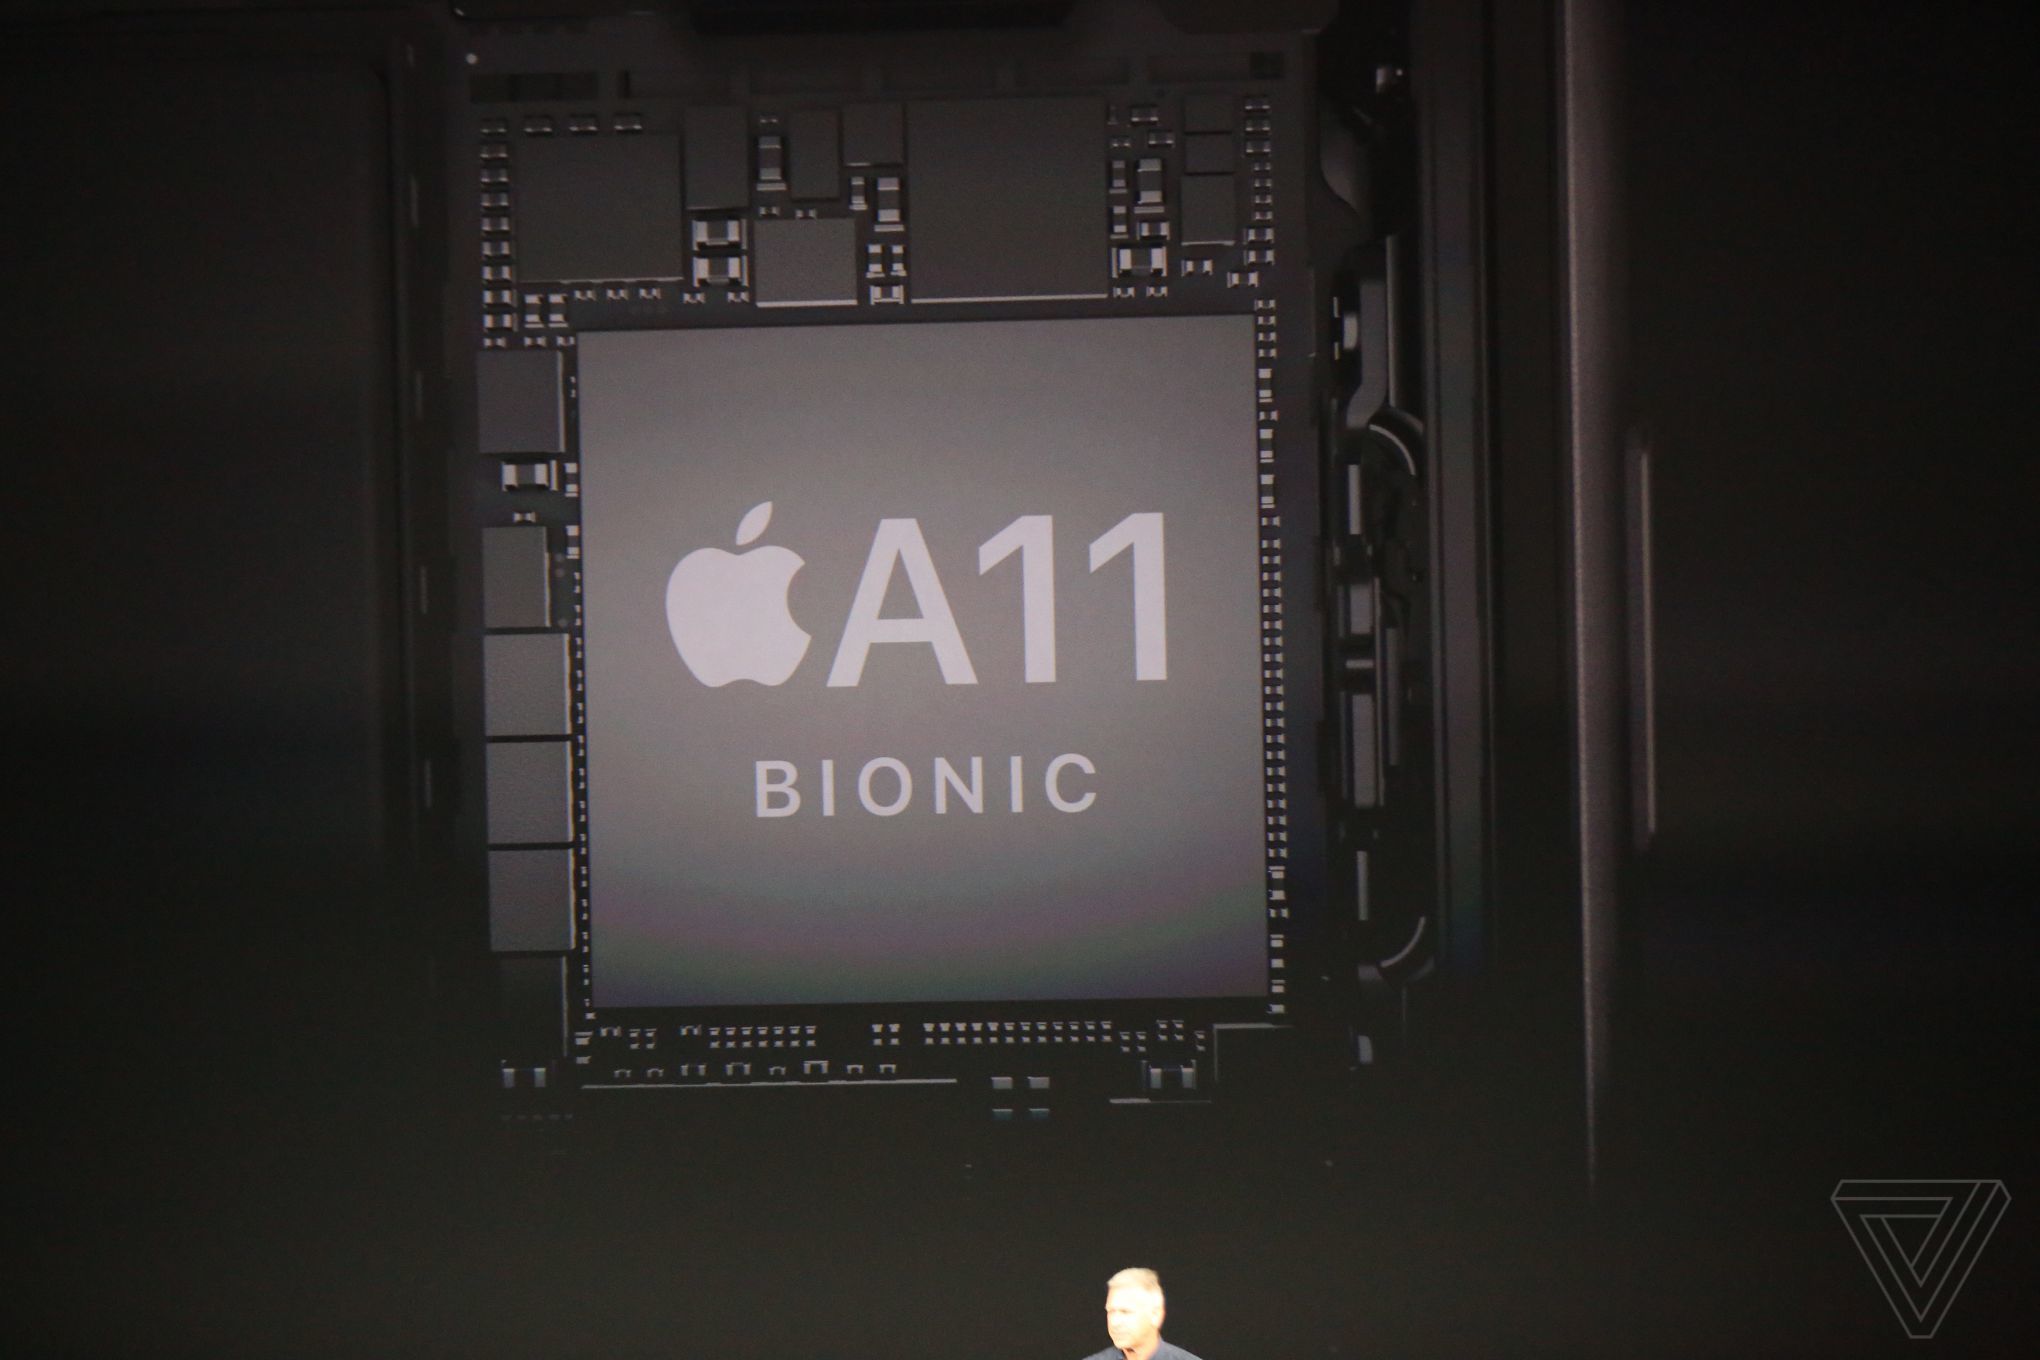 iphone 8 A11 biónico iPhone 7